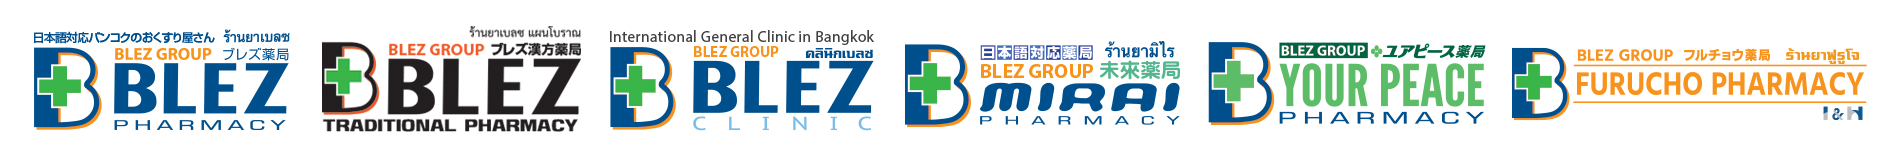 BLEZ Pharmacy Group